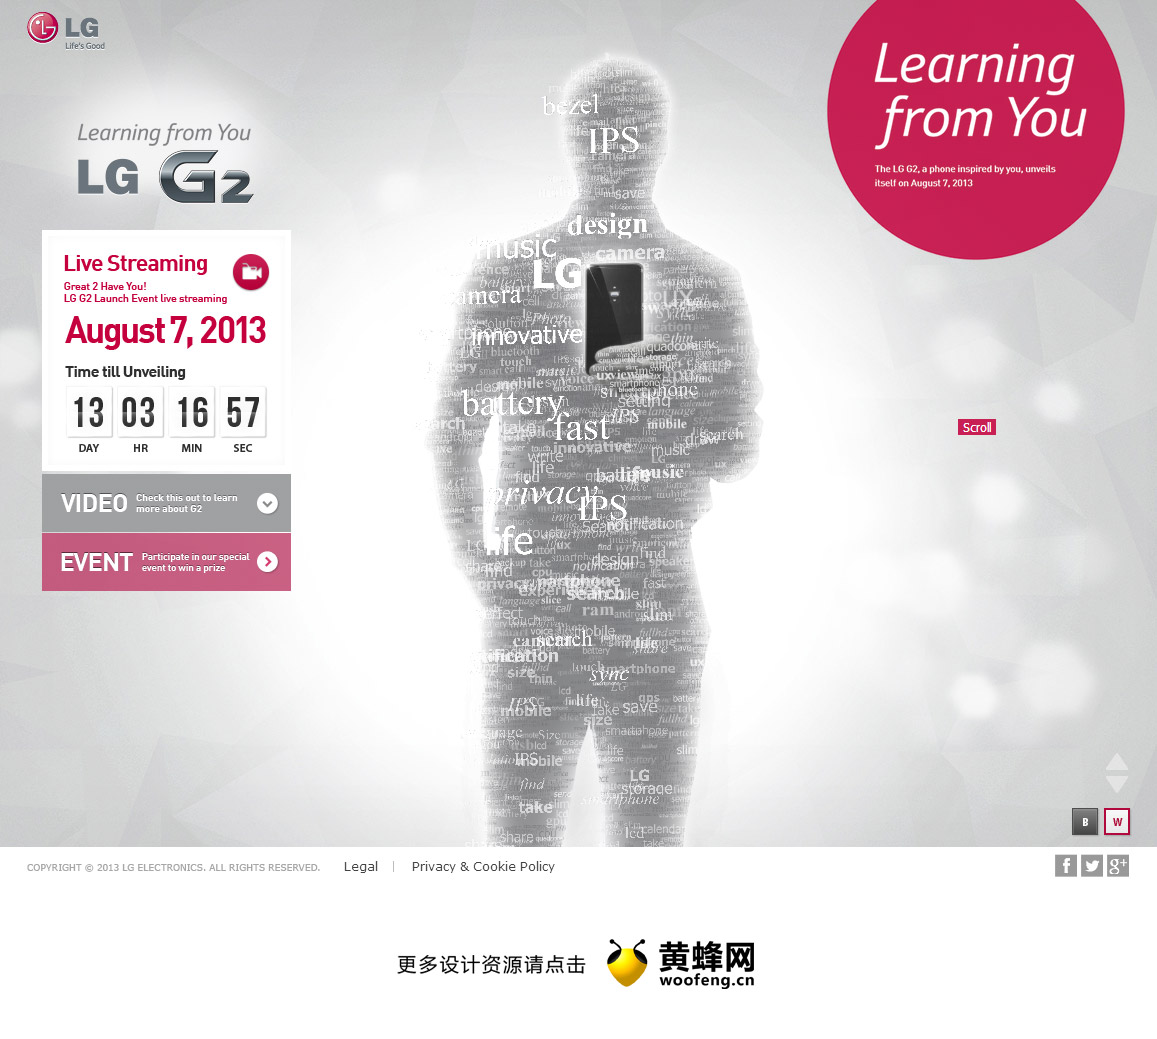 LG G2，来源自黄蜂网https://woofeng.cn/